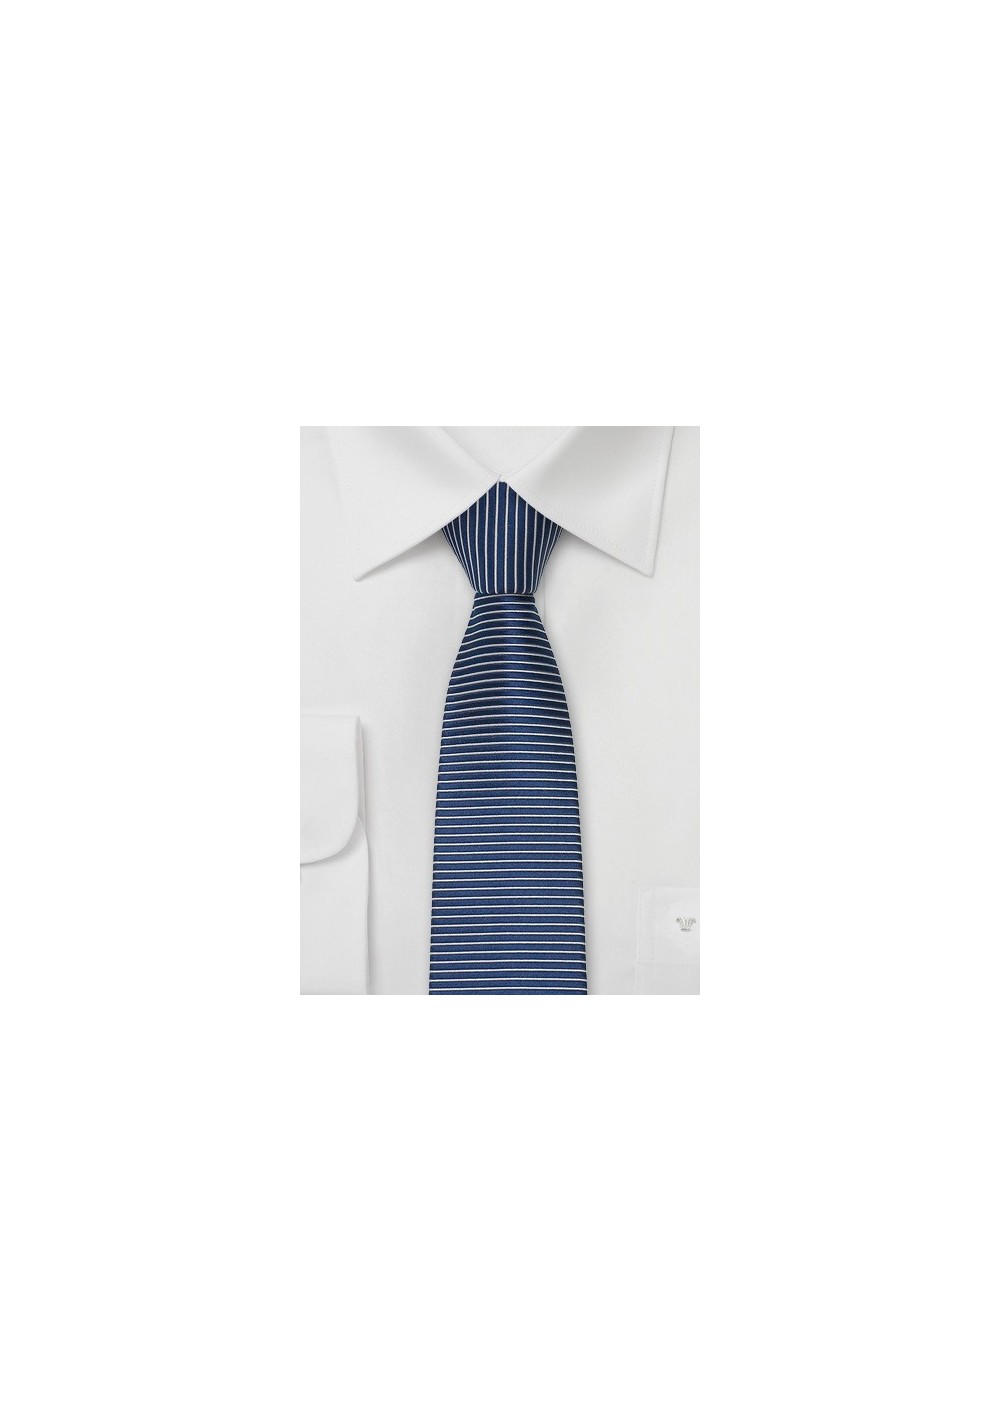 Skinny Neck Ties - Skinny Silk Tie by Cavallieri